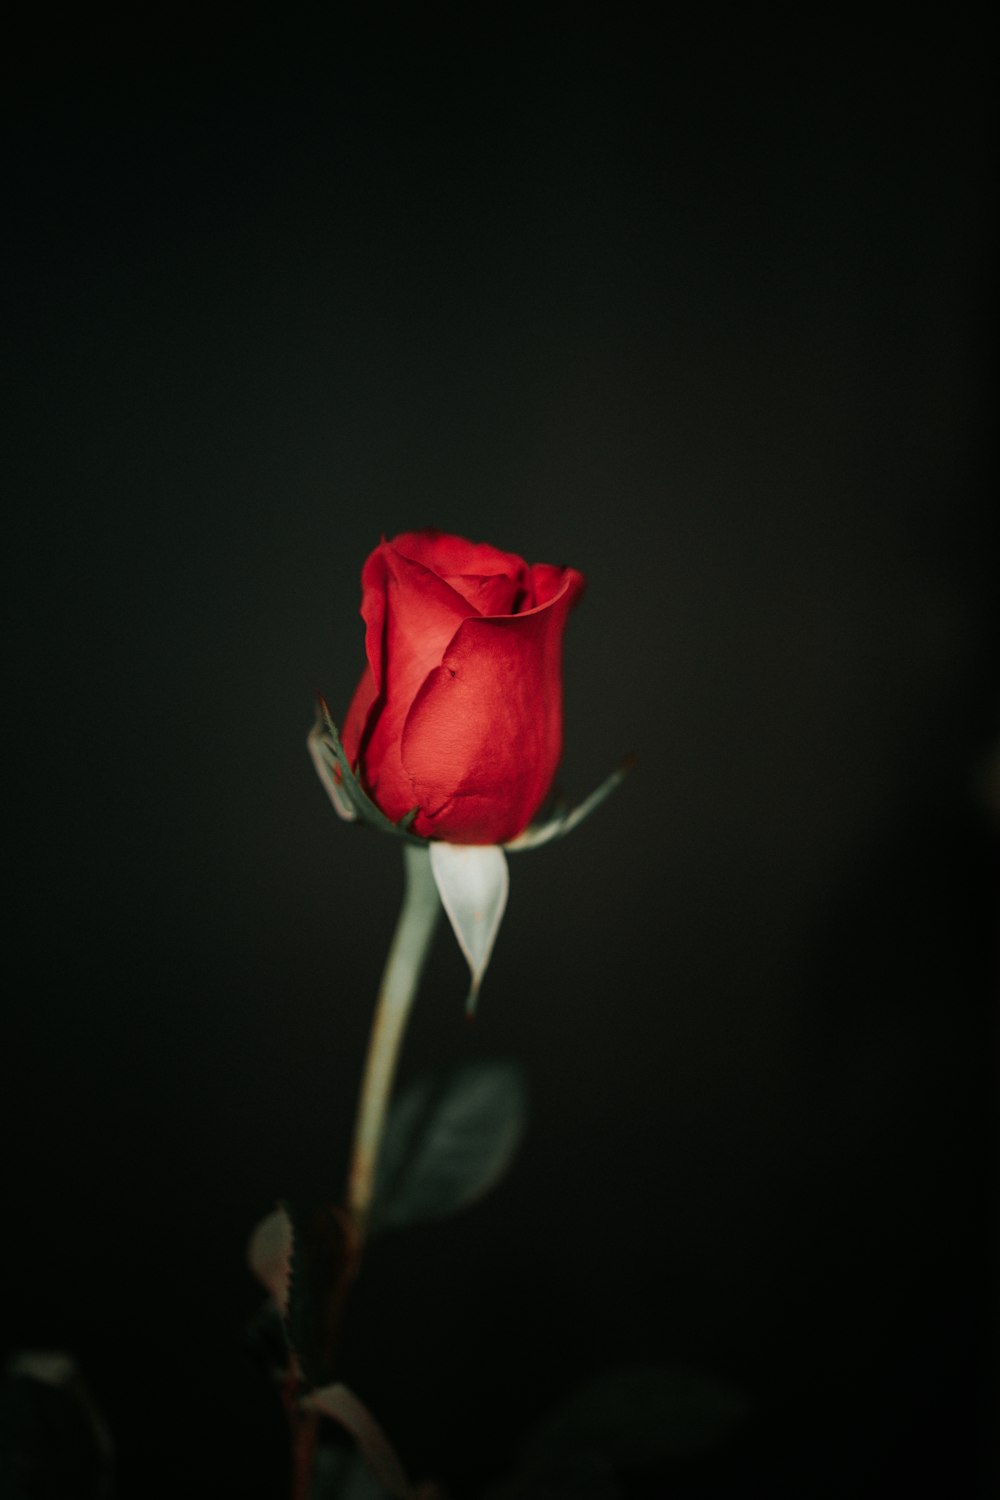 999 Red Black Rose Pictures Download Free Images On Unsplash